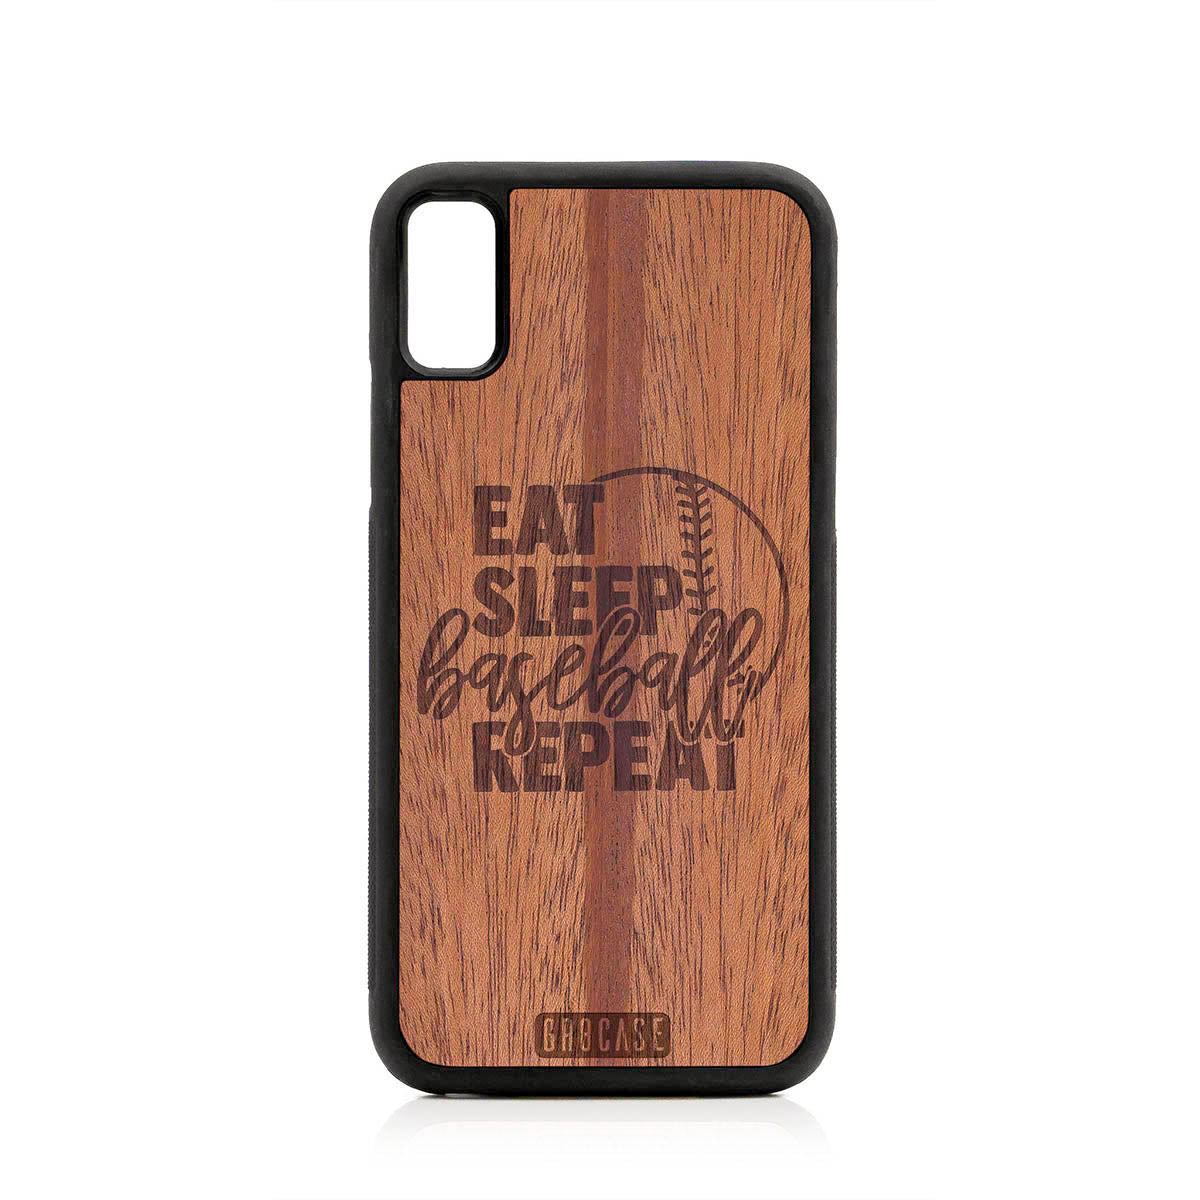 Eat Sleep Baseball Repeat Design Wood Case For iPhone XR